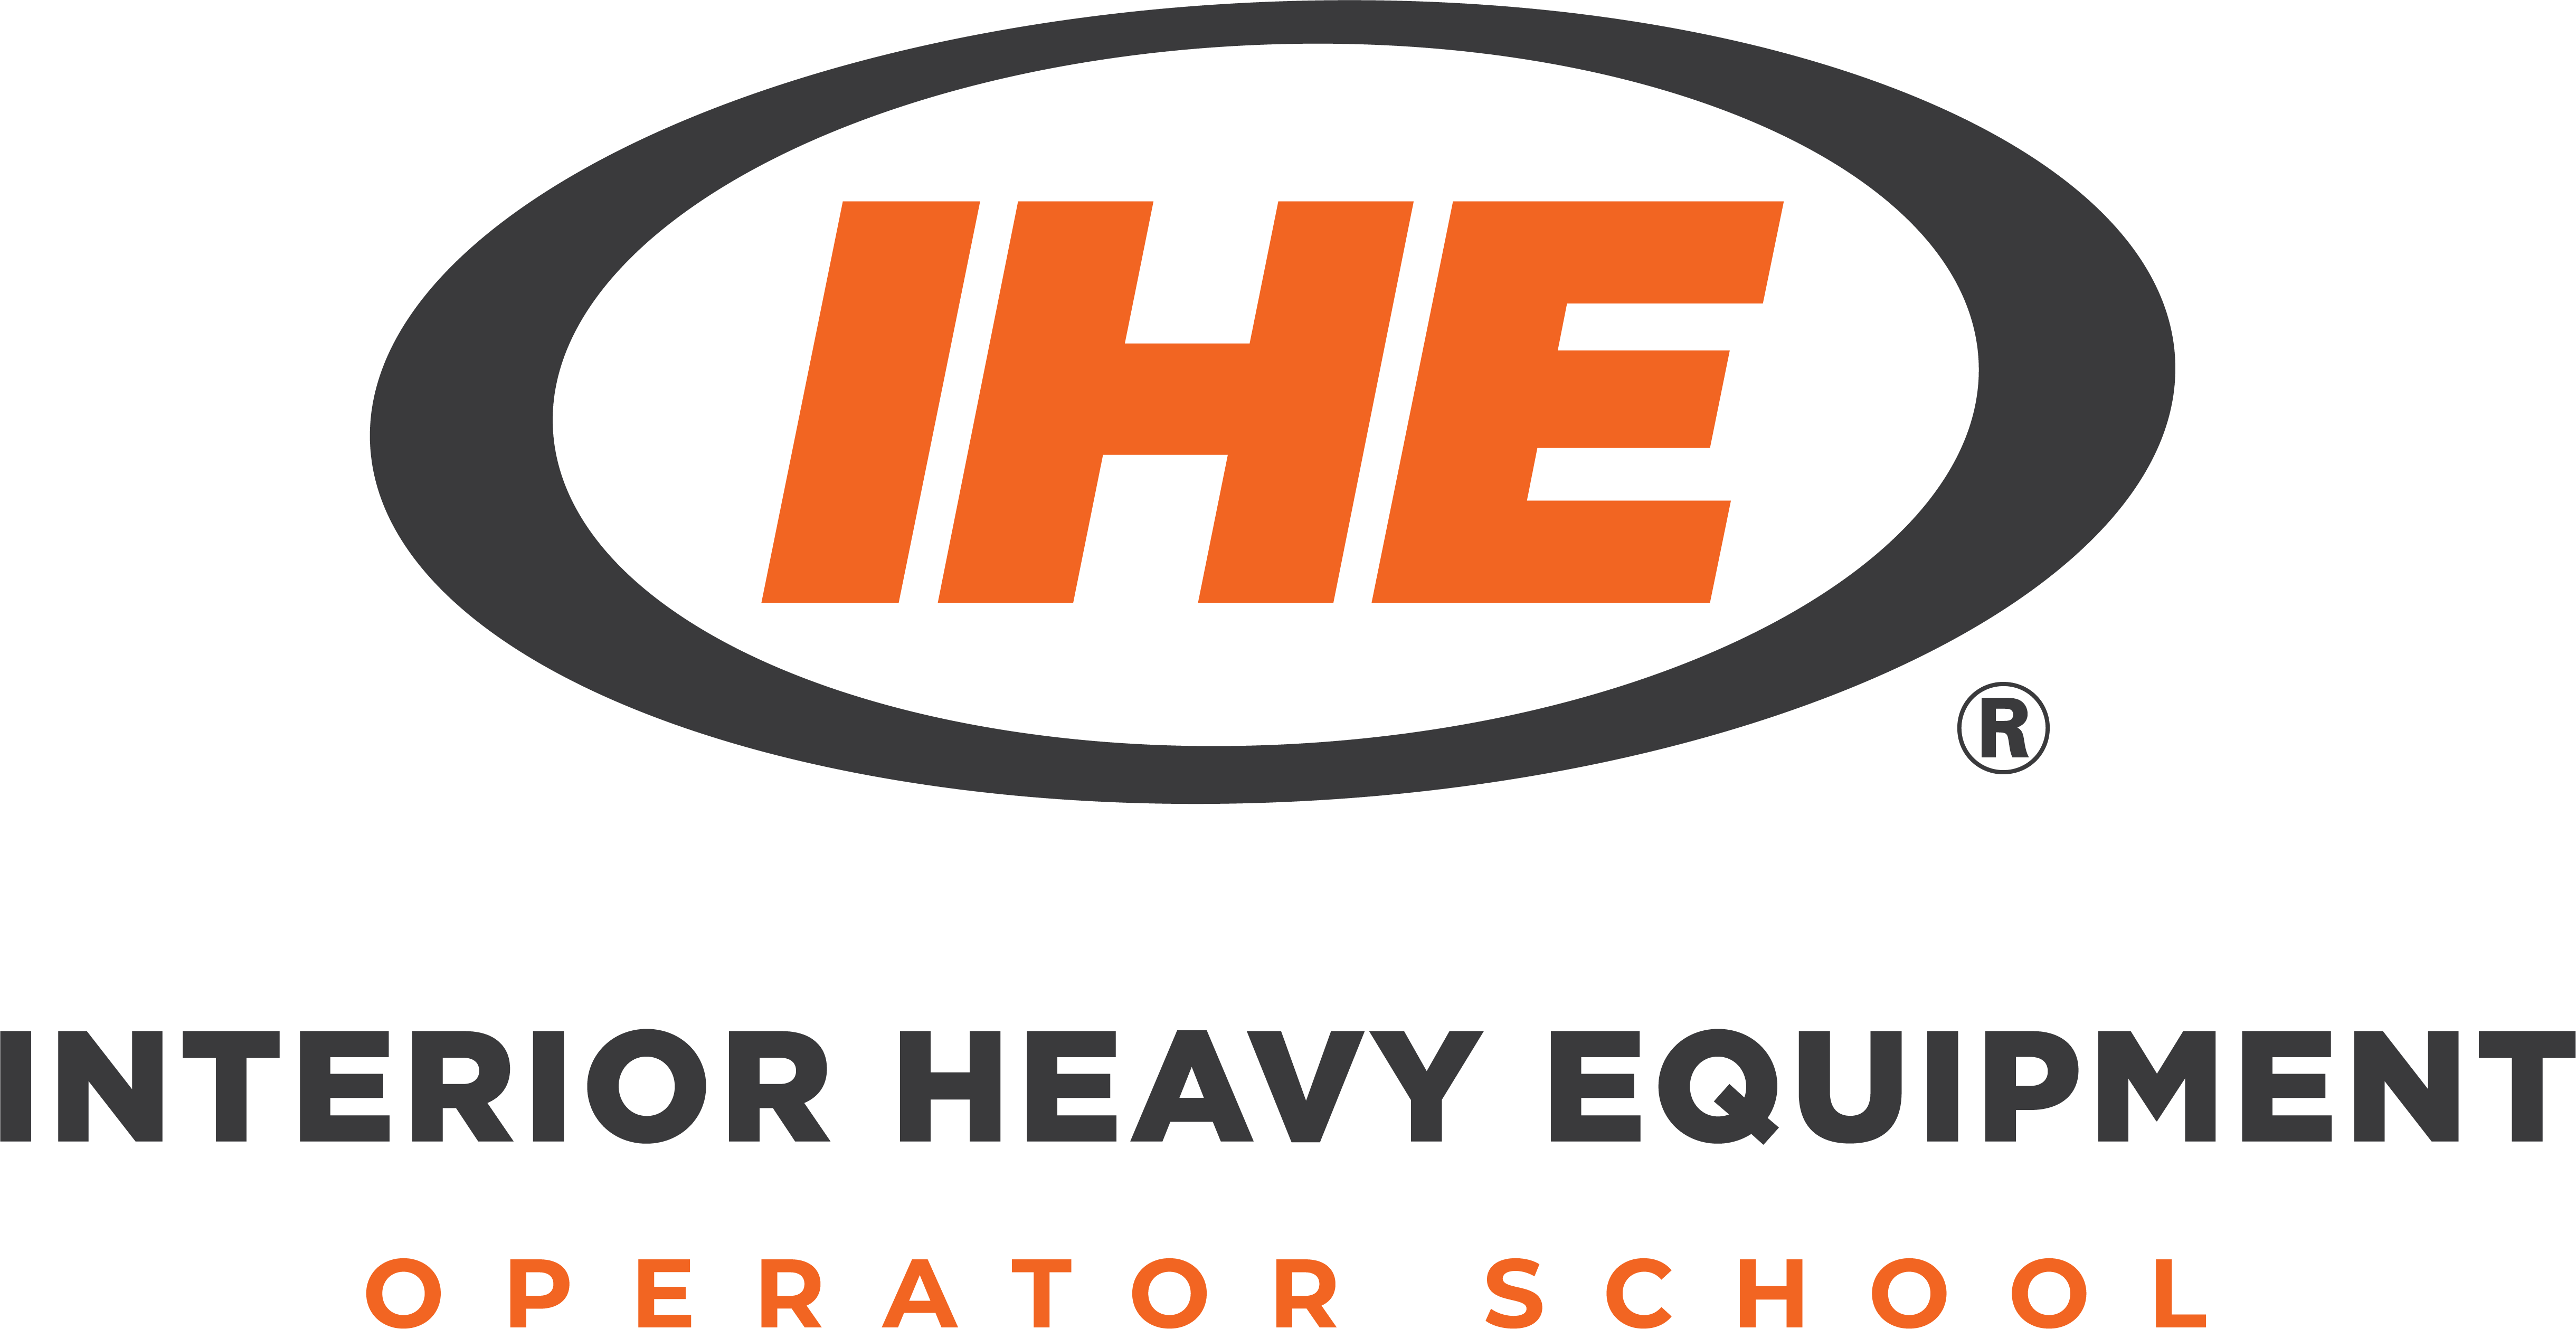 Interior Heavy Equipment Operator School Ltd.